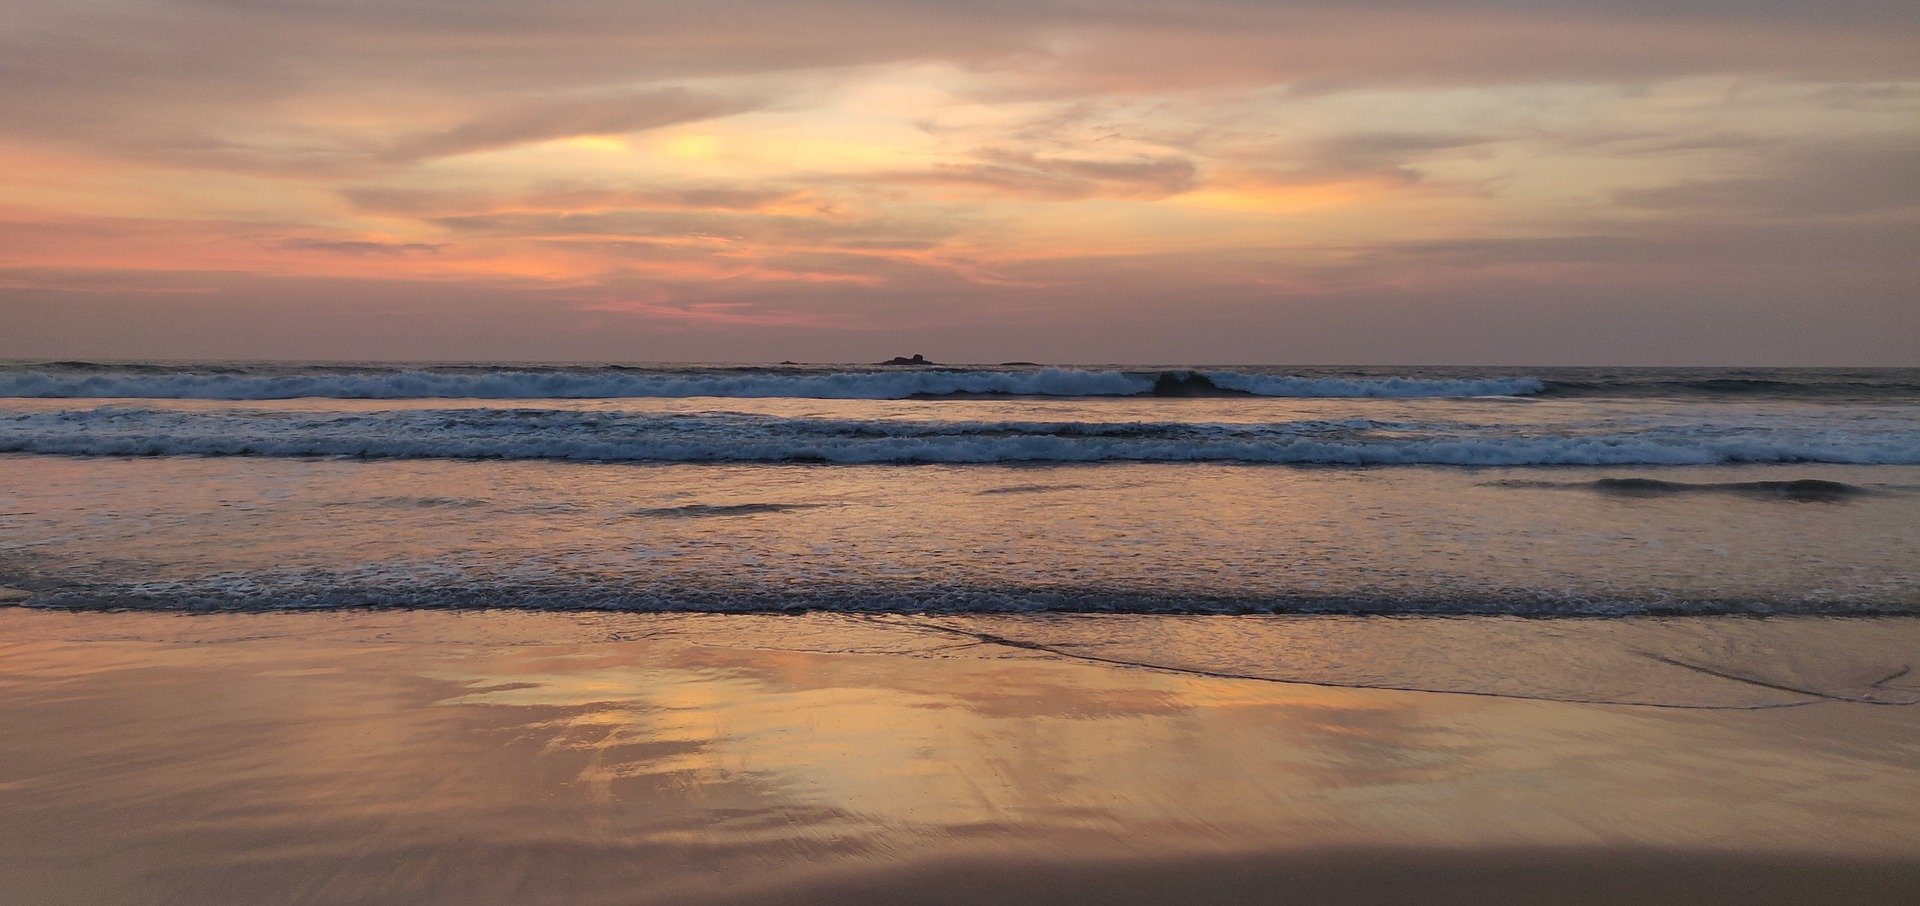 Ahungalla Beach in Sri Lanka during the sunset.